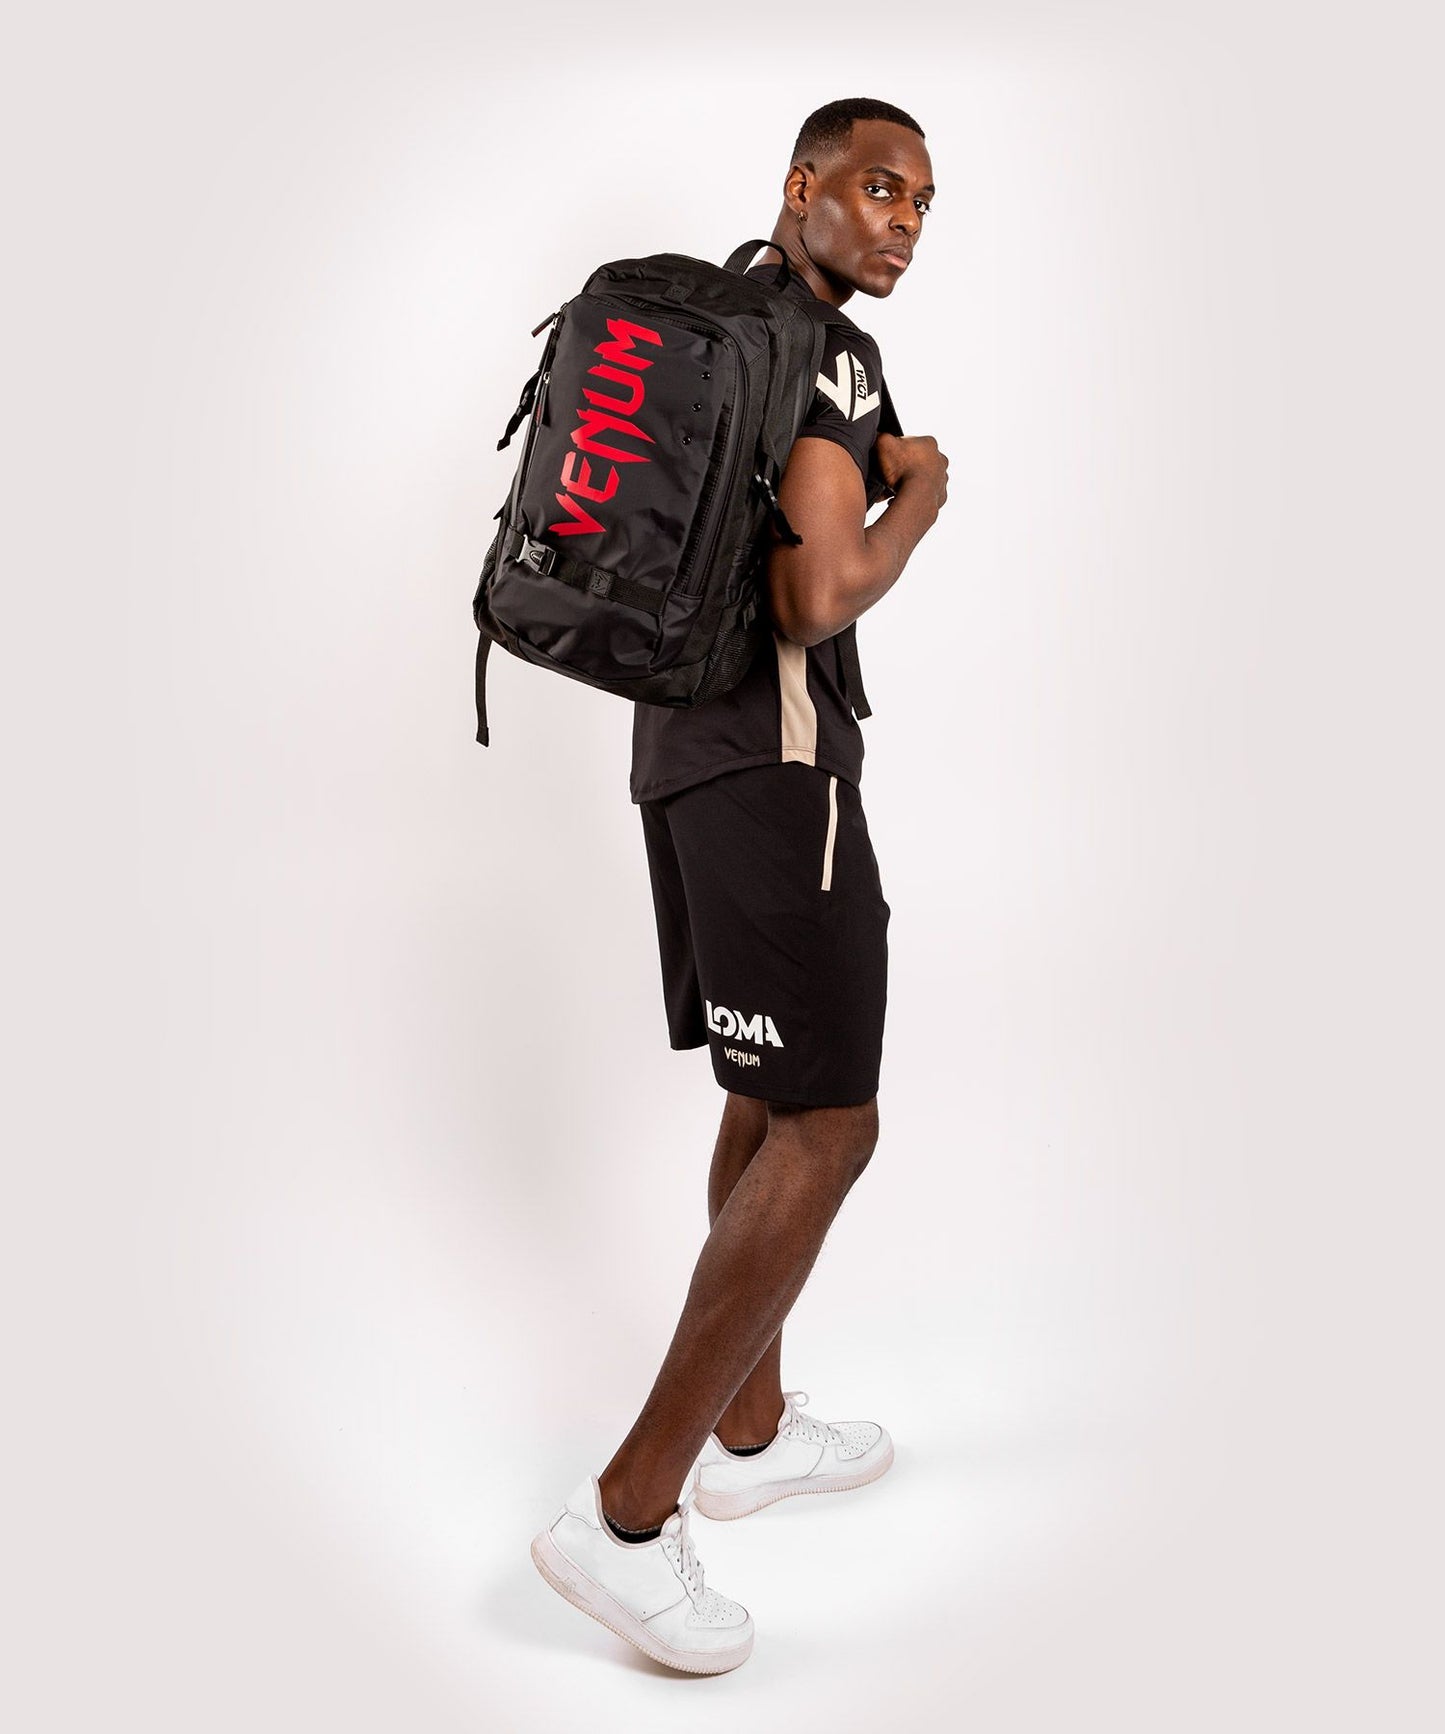 Challenger Pro Evo Backpack-Black/Red